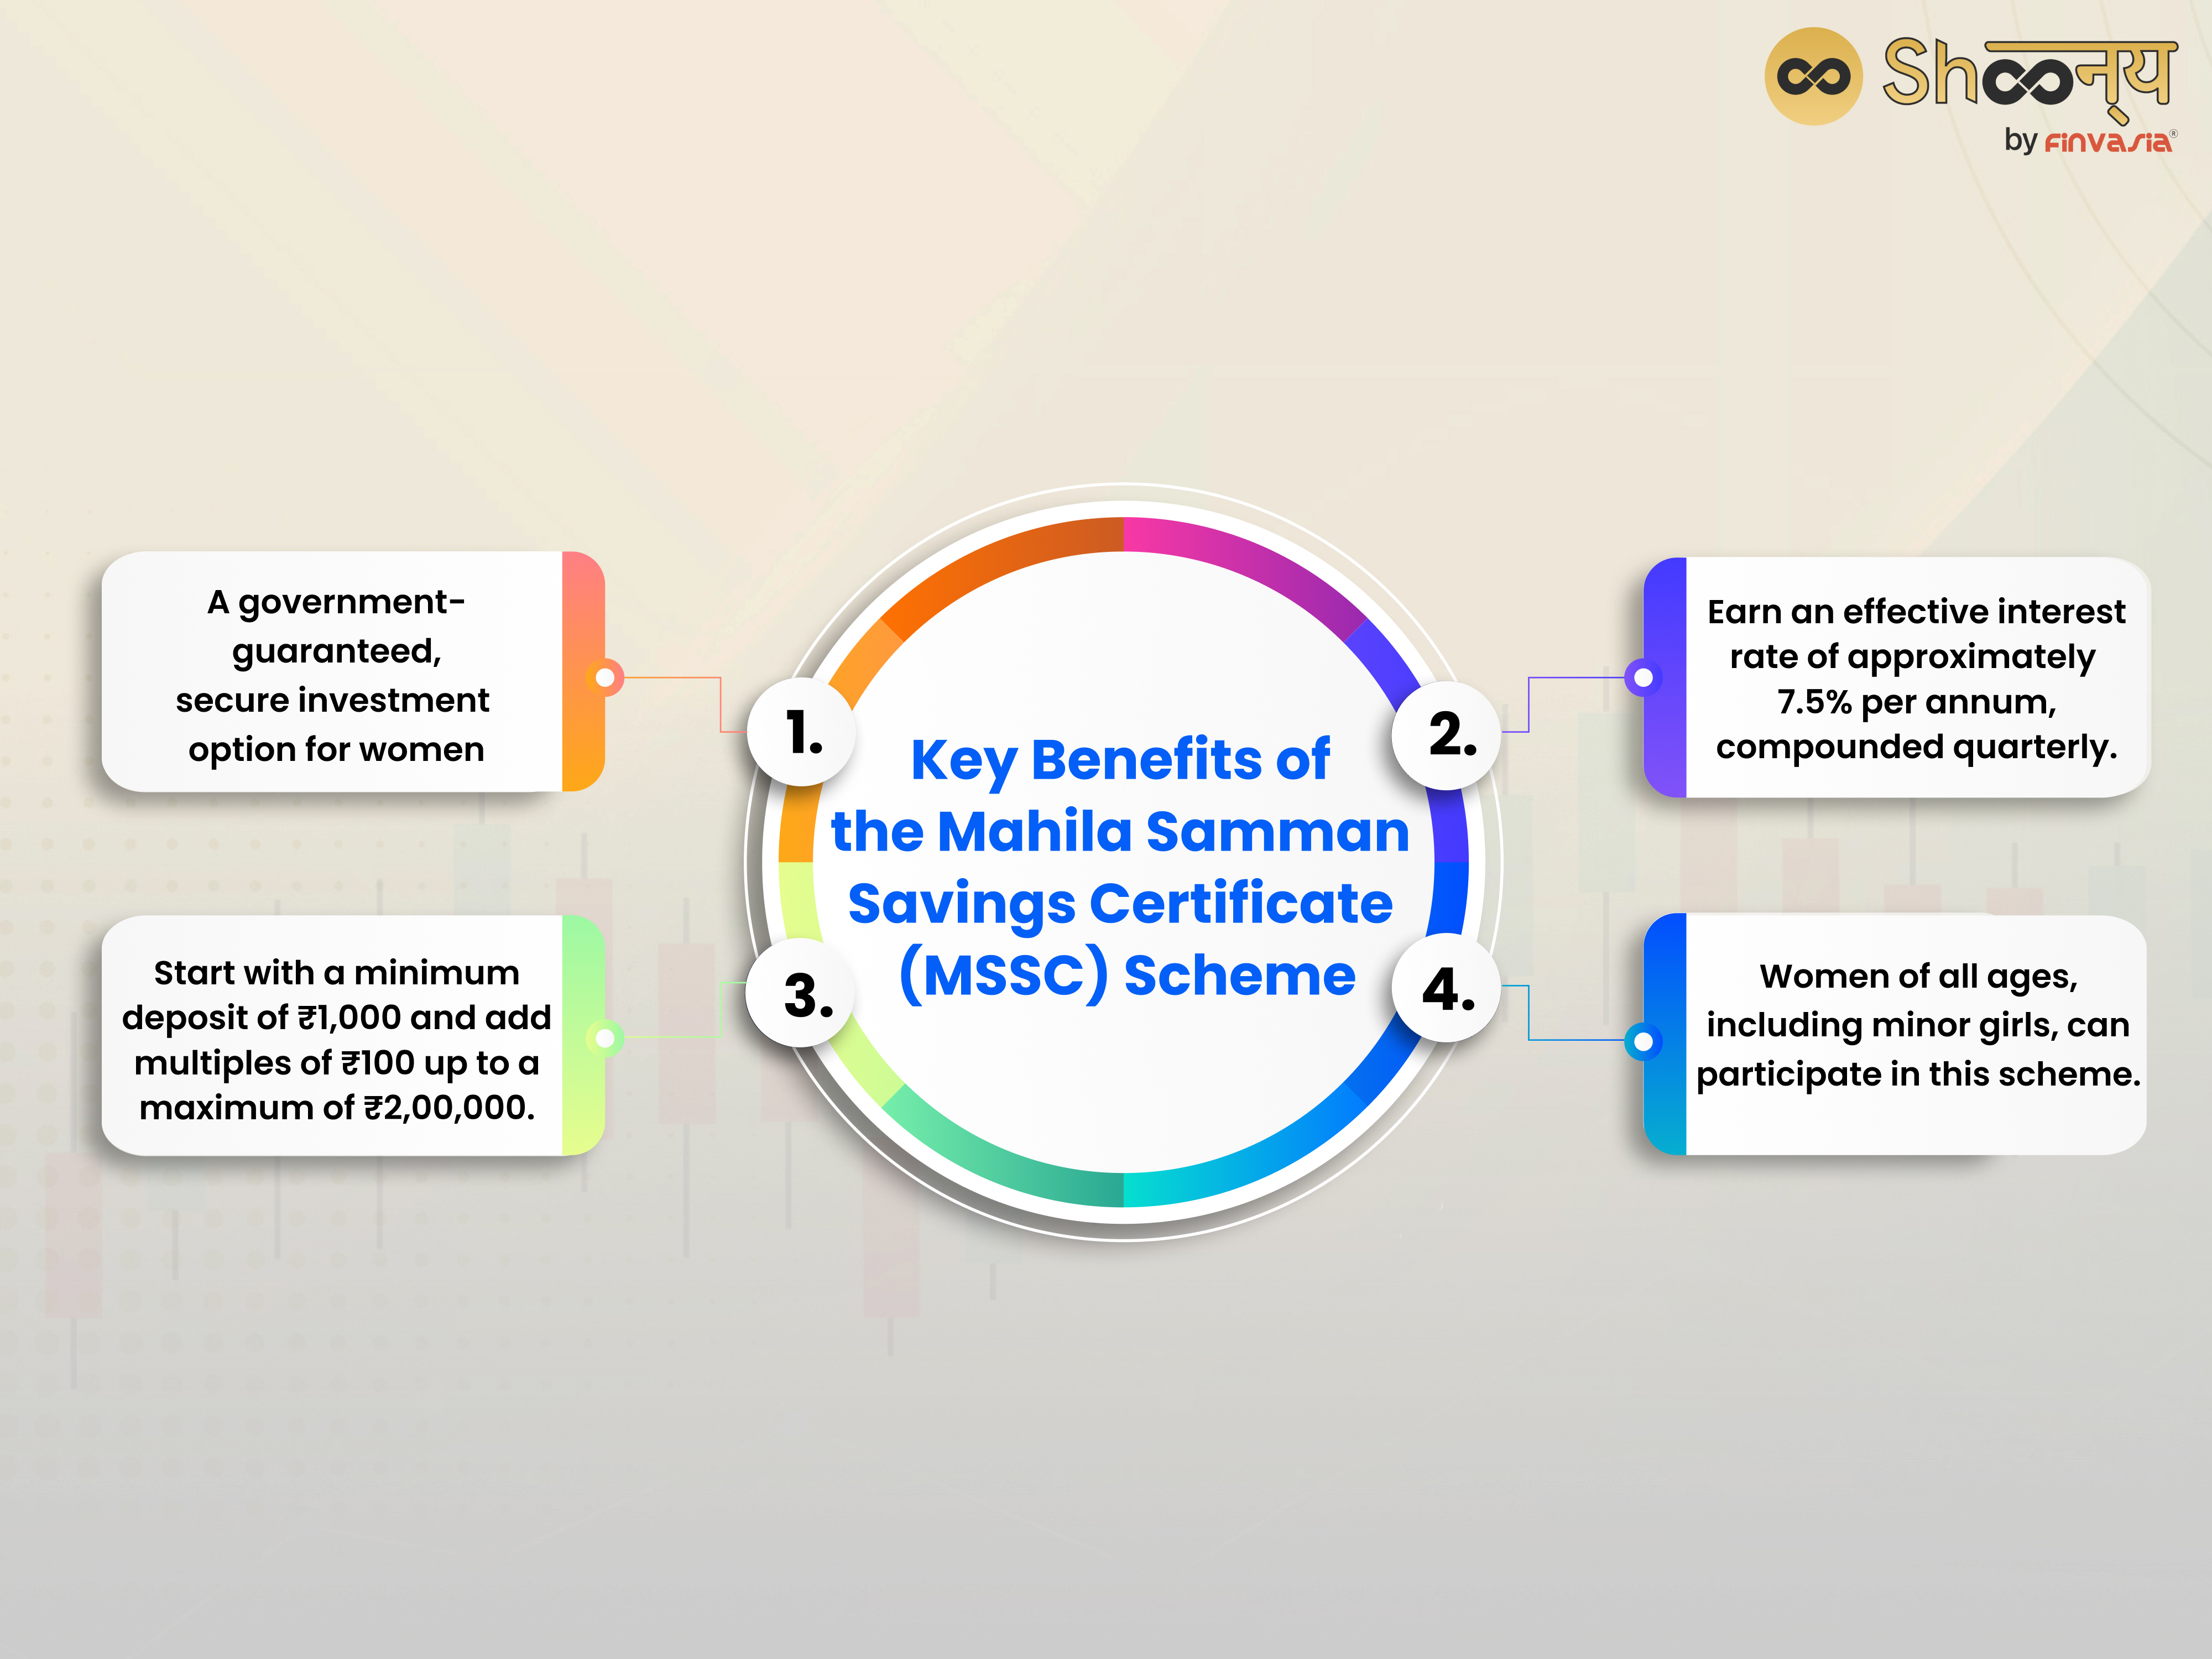 Key Benefits of the Mahila Samman Savings Certificate (MSSC) Scheme